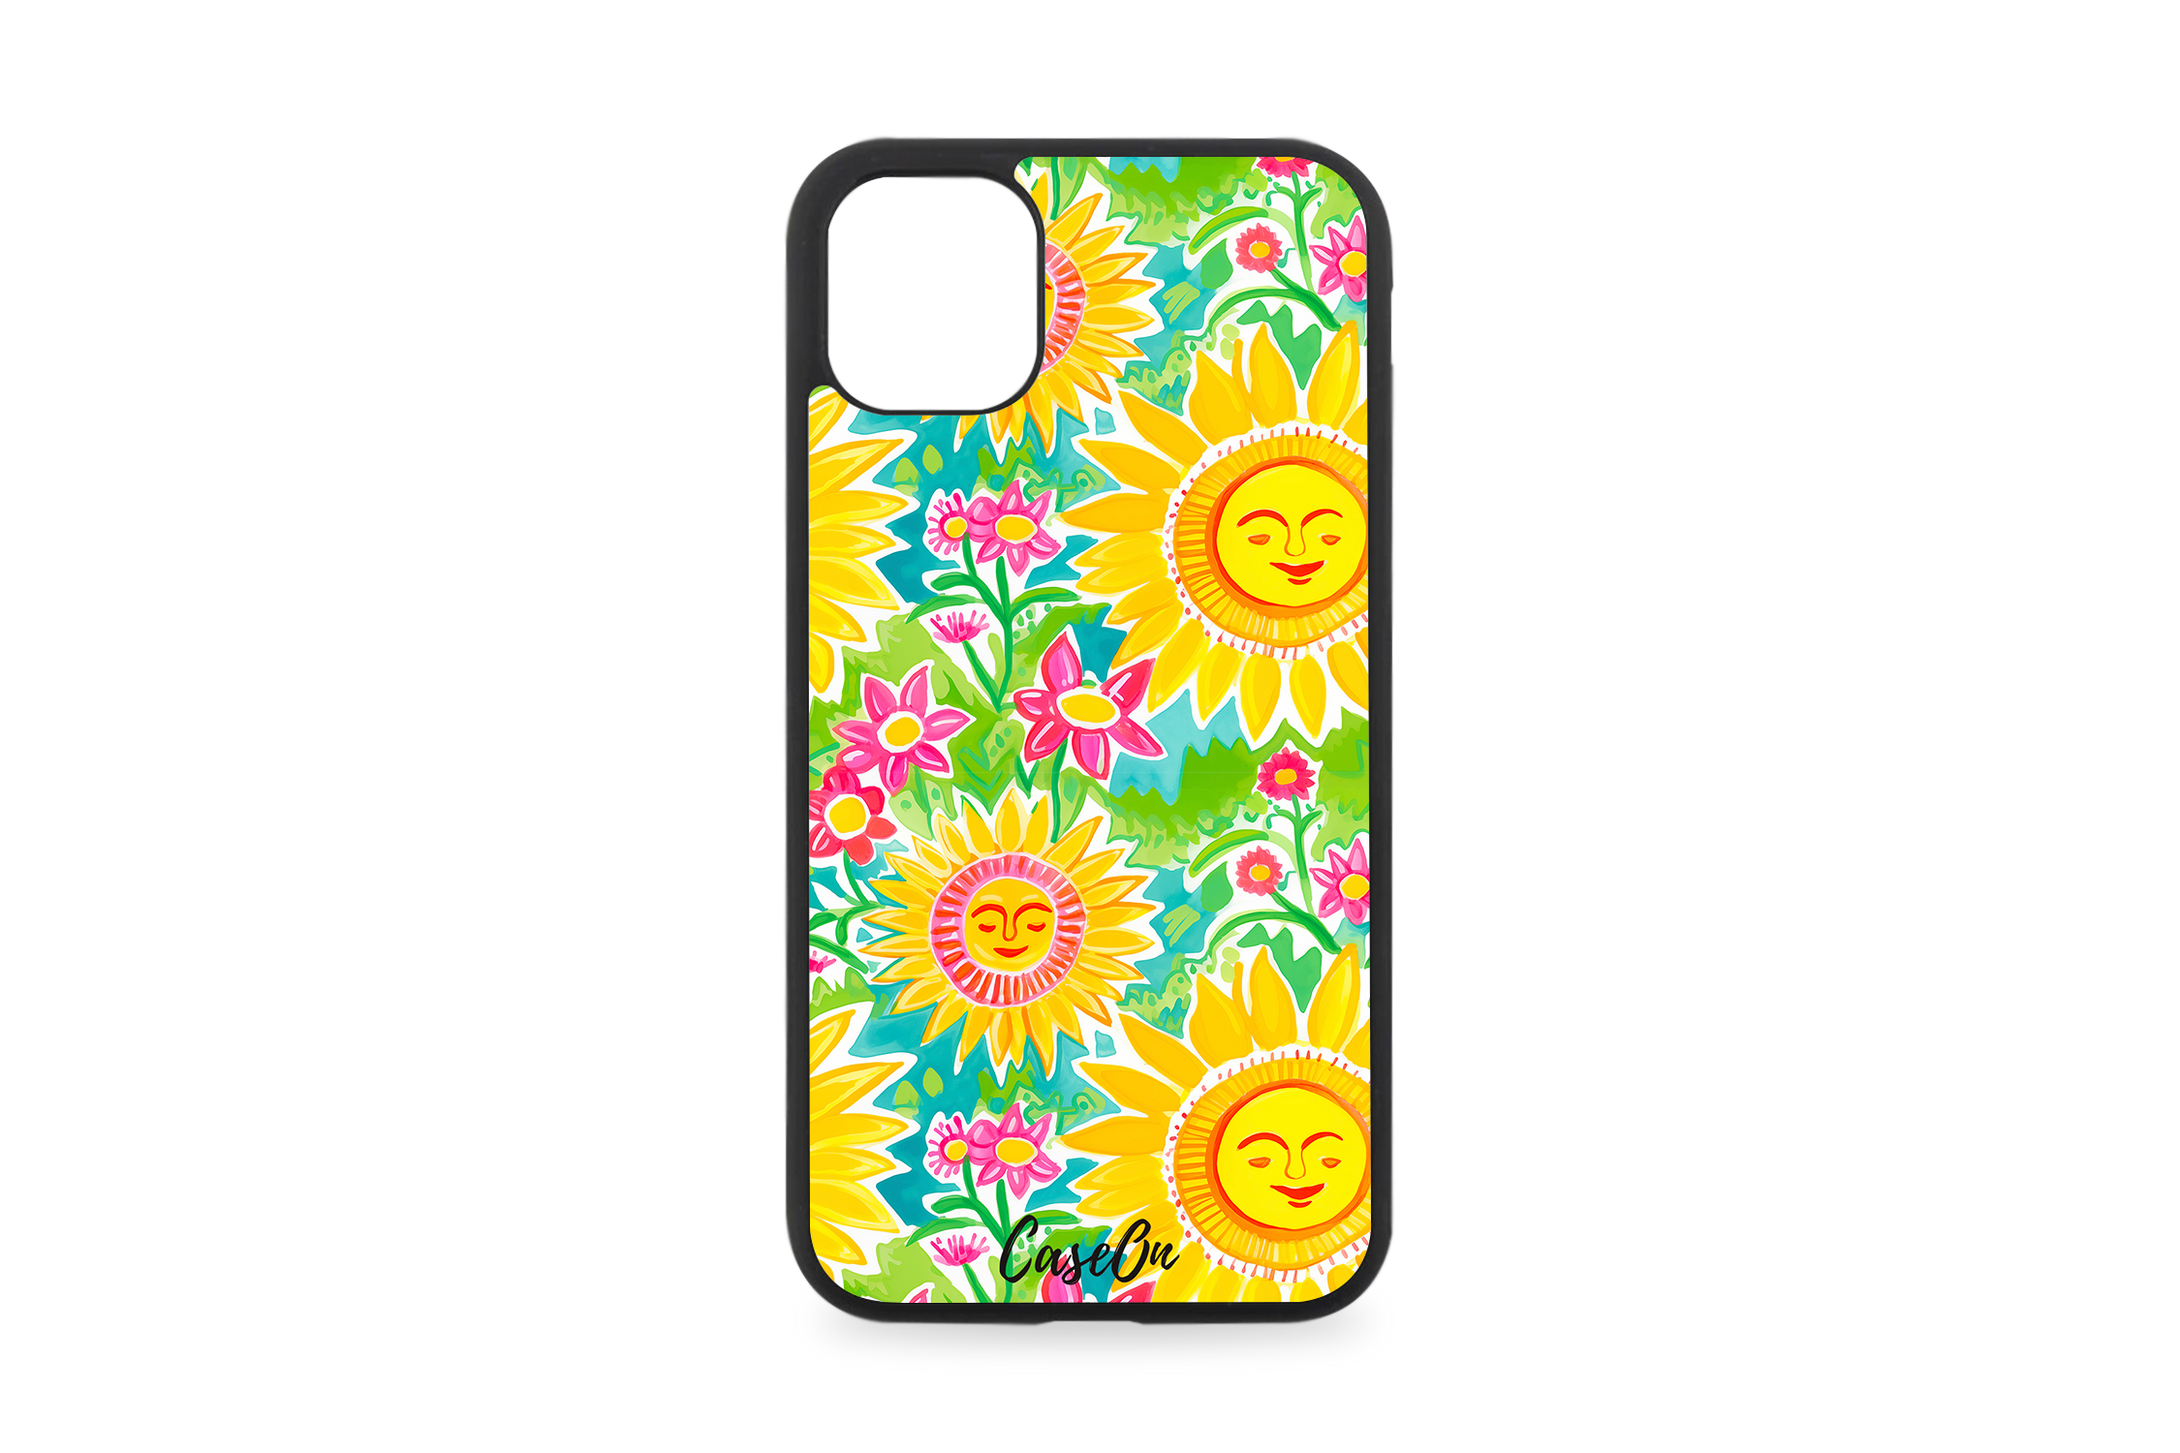 Sunshine Daze iPhone case